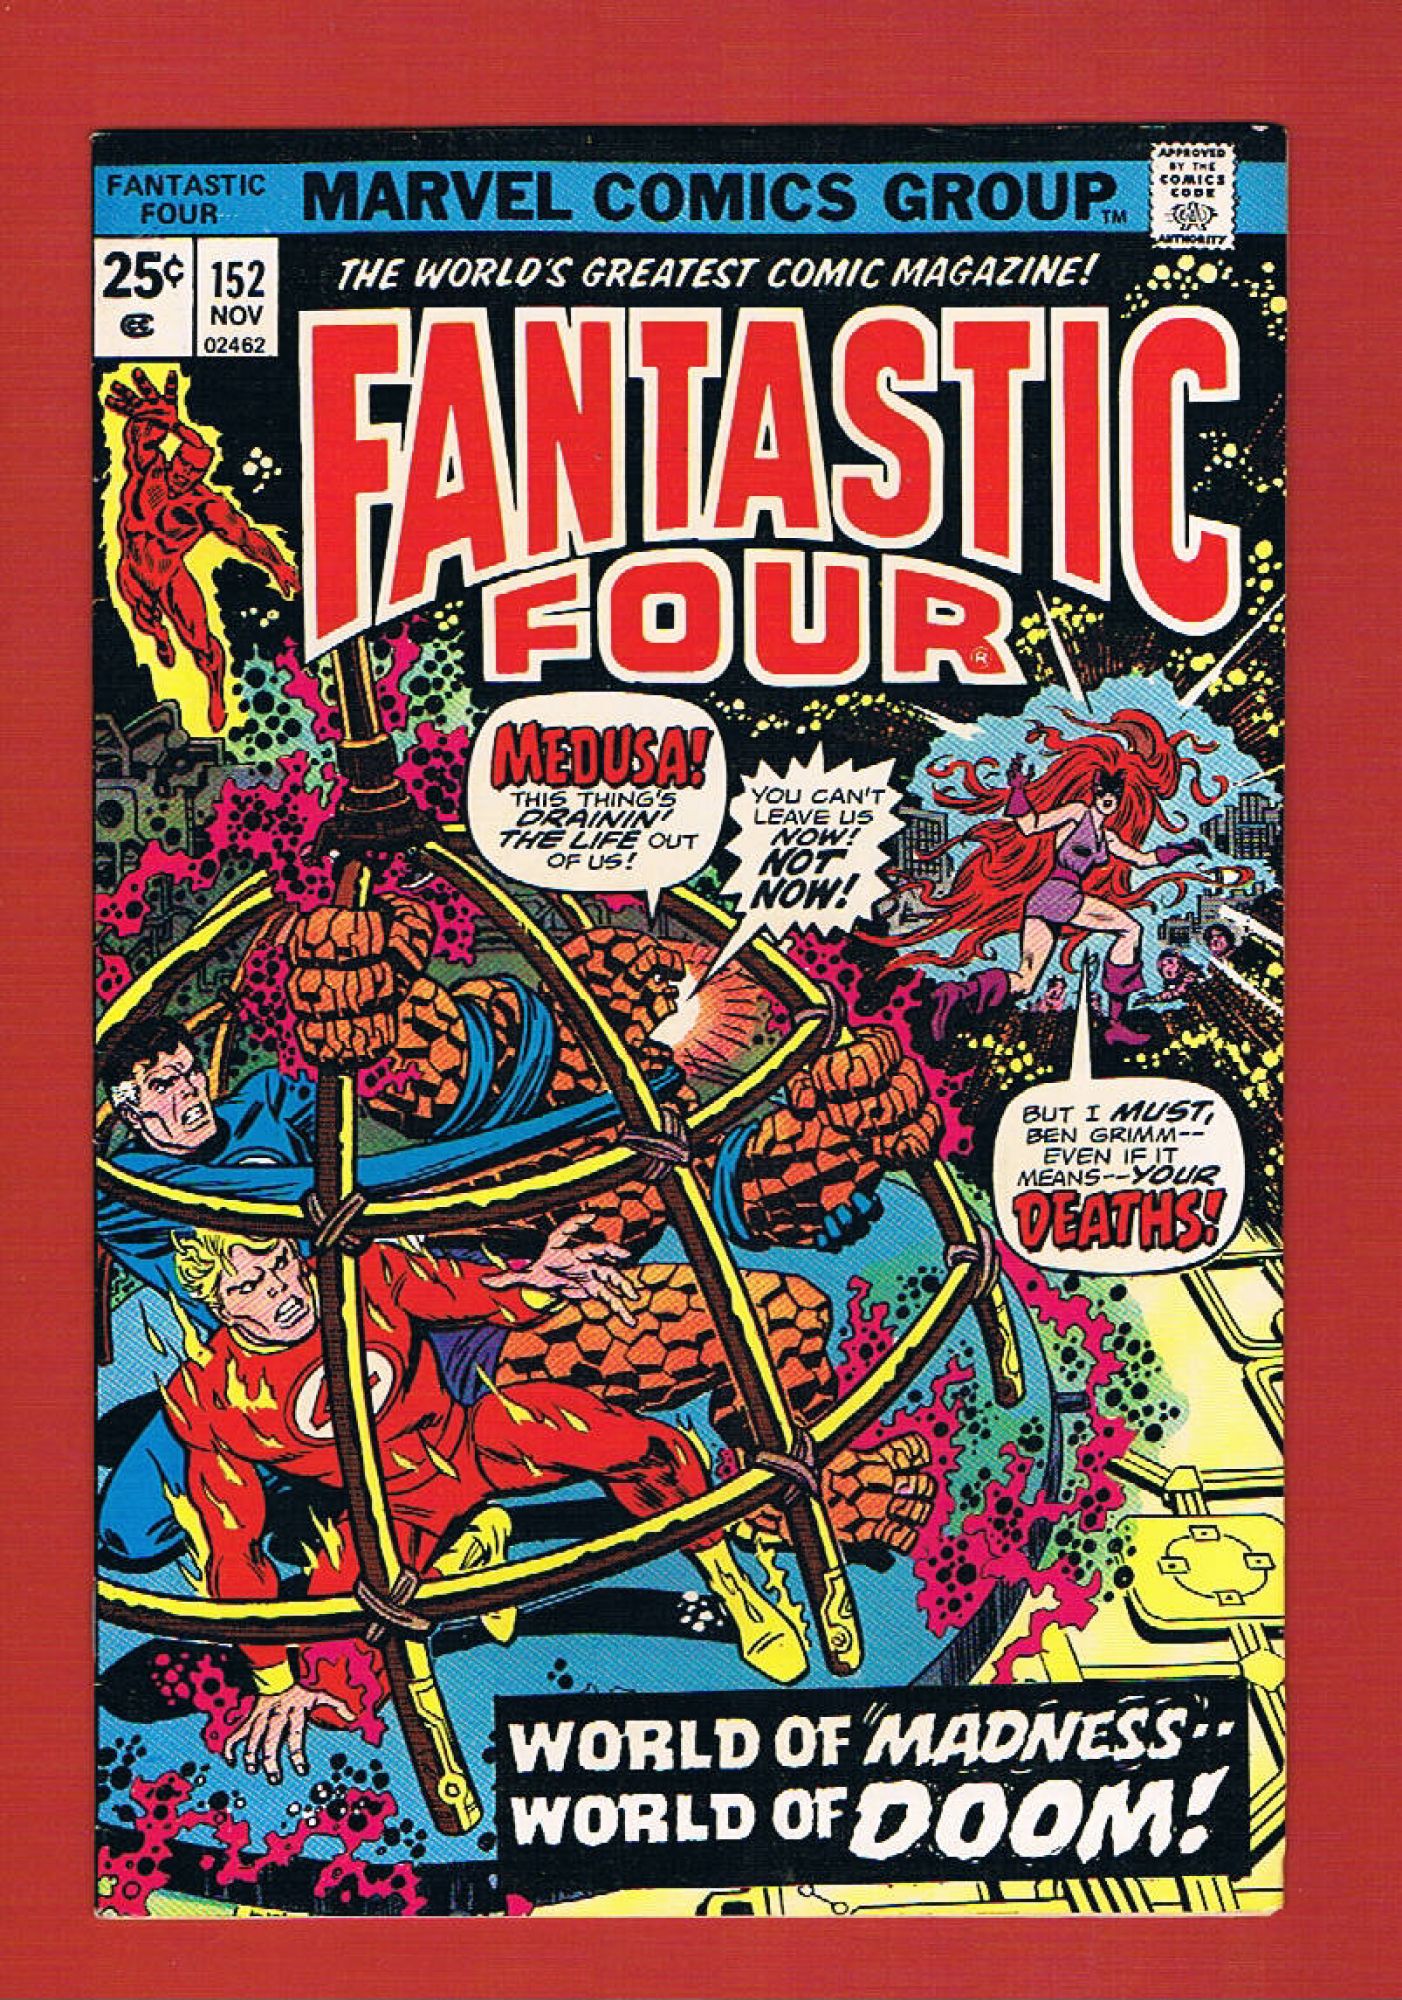 Fantastic Four #152, Nov 1974, 8.5 VF+